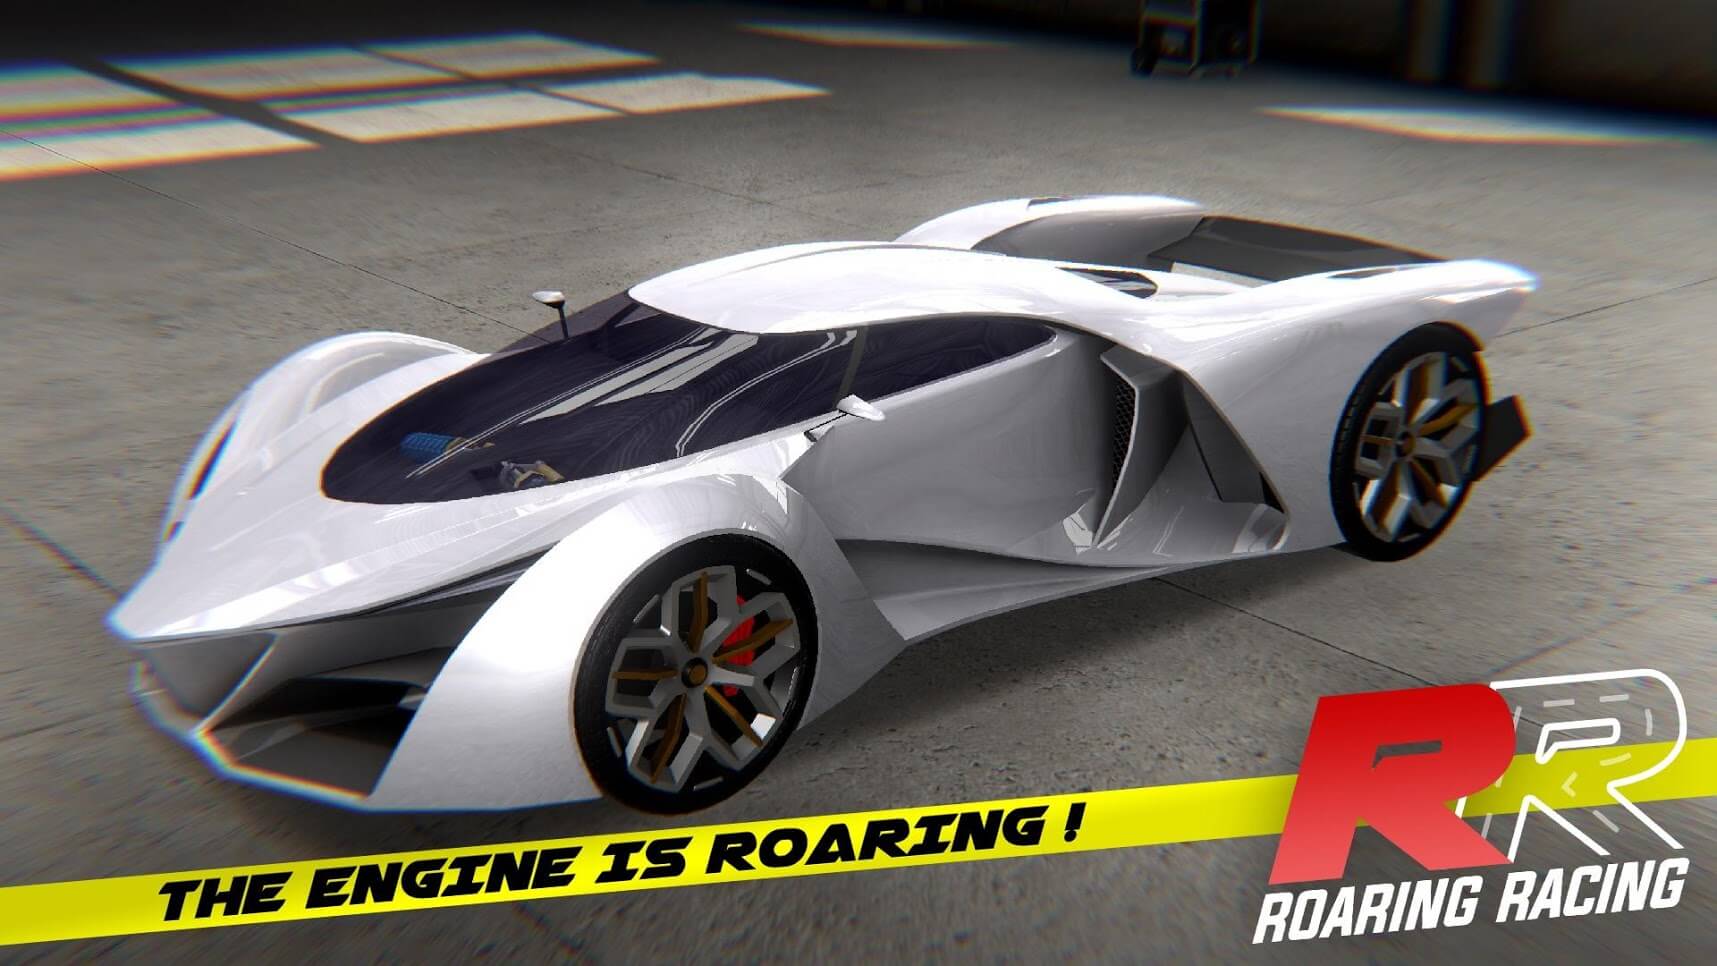 Roaring-Racing-5.jpg